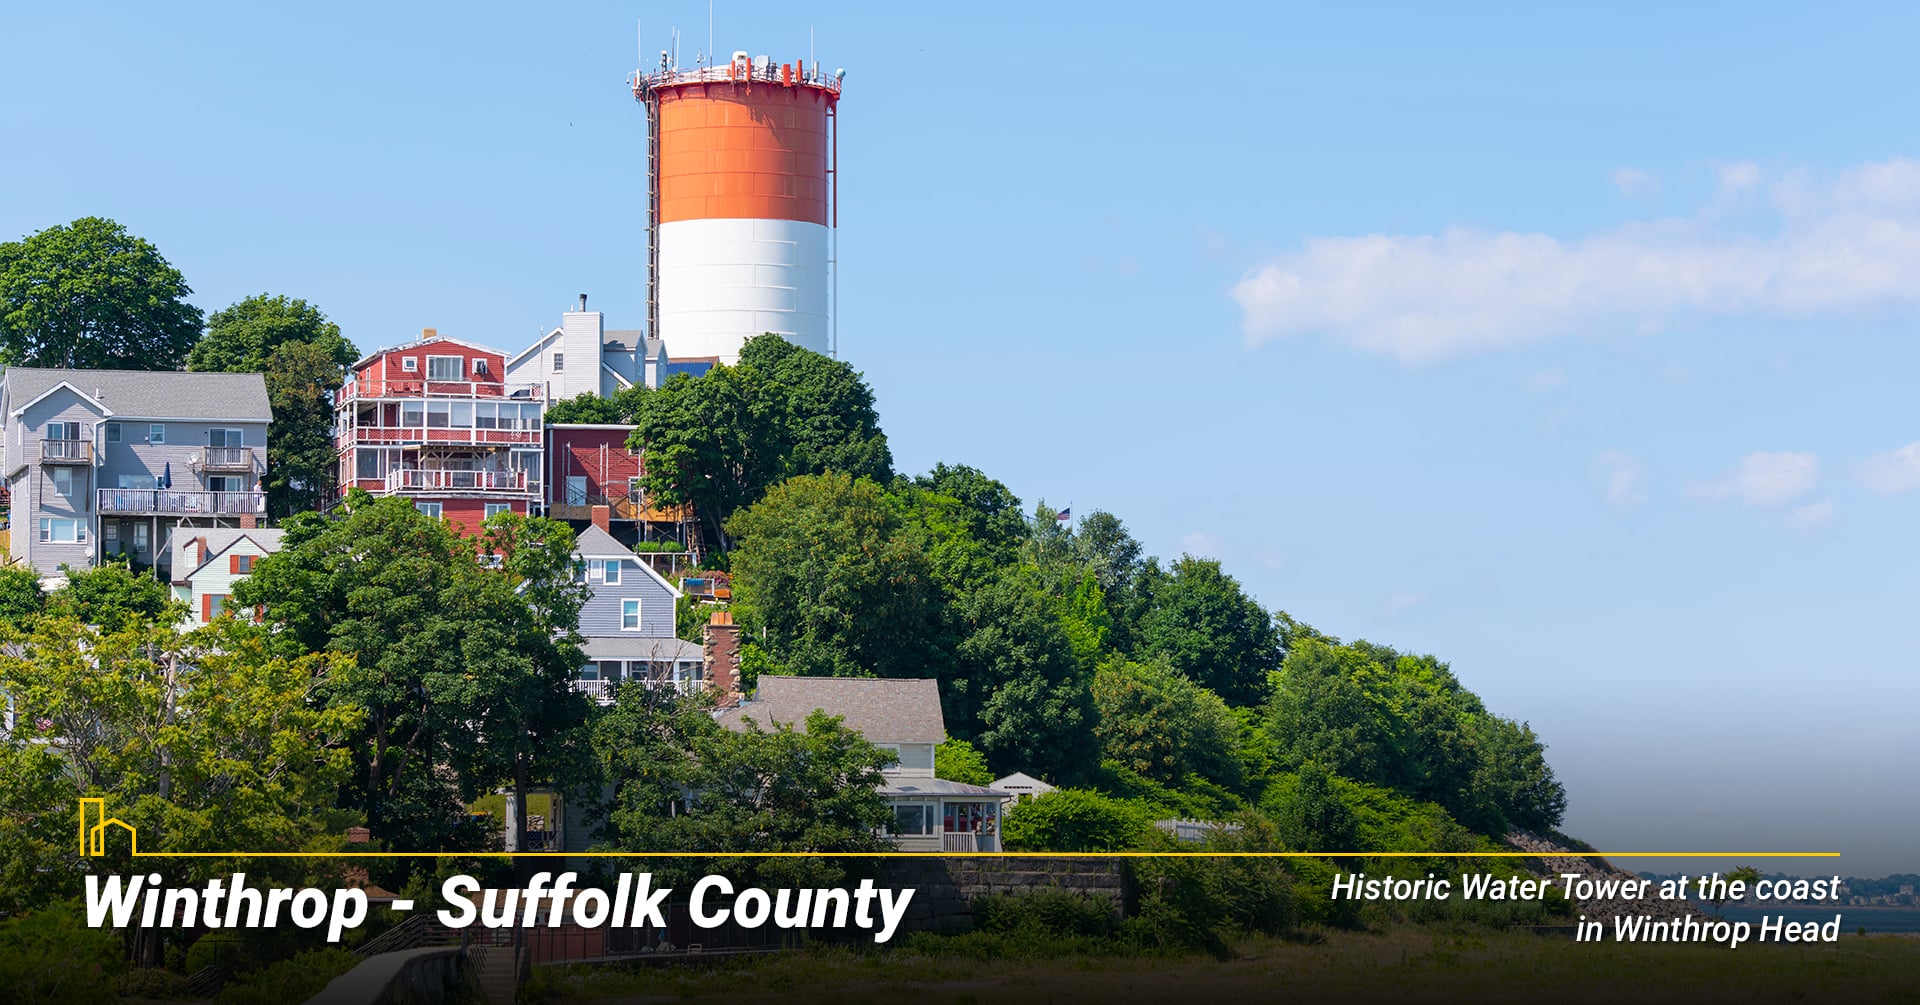 Winthrop - Suffolk County